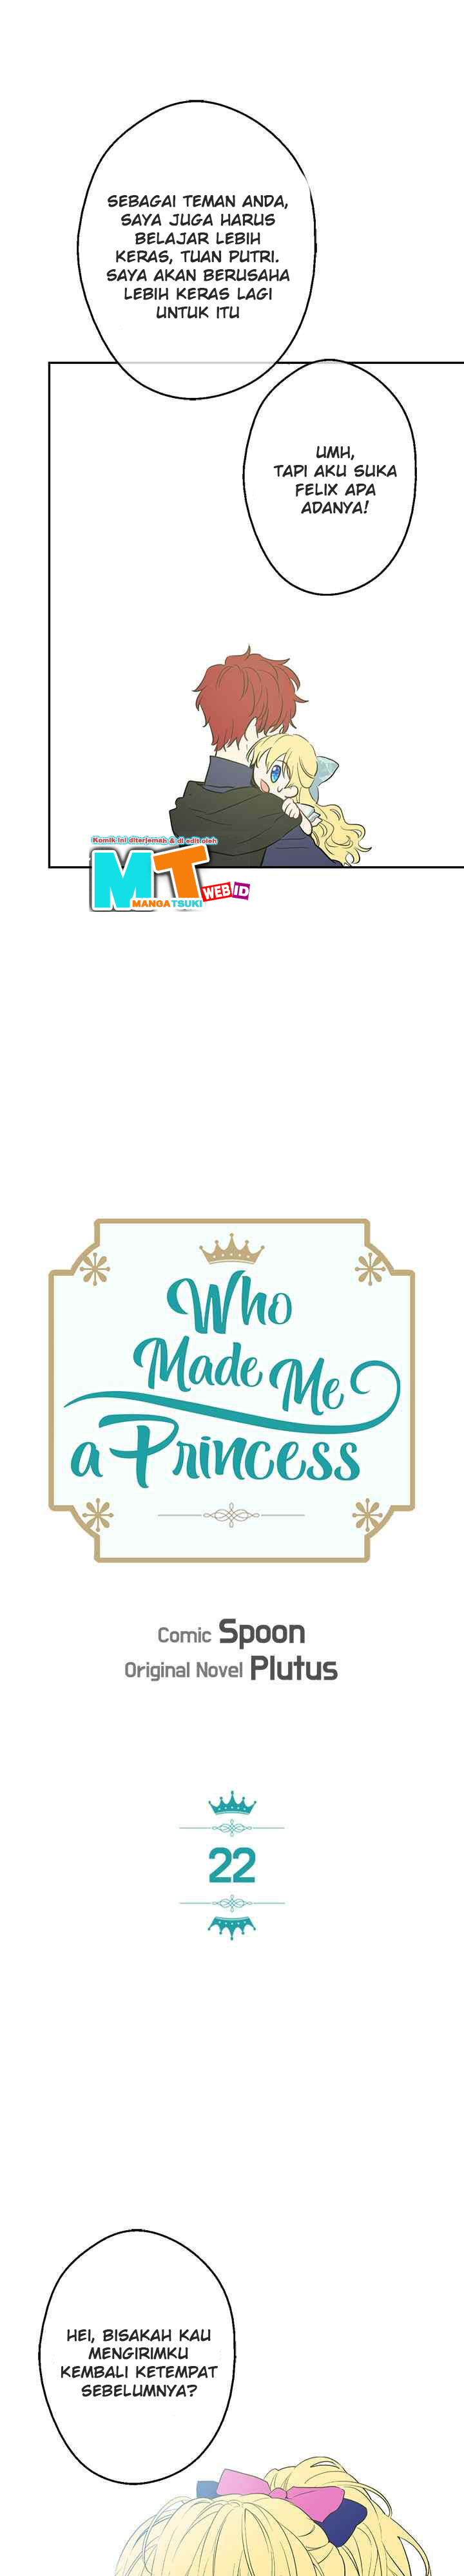 Who Made Me a Princess Chapter 22